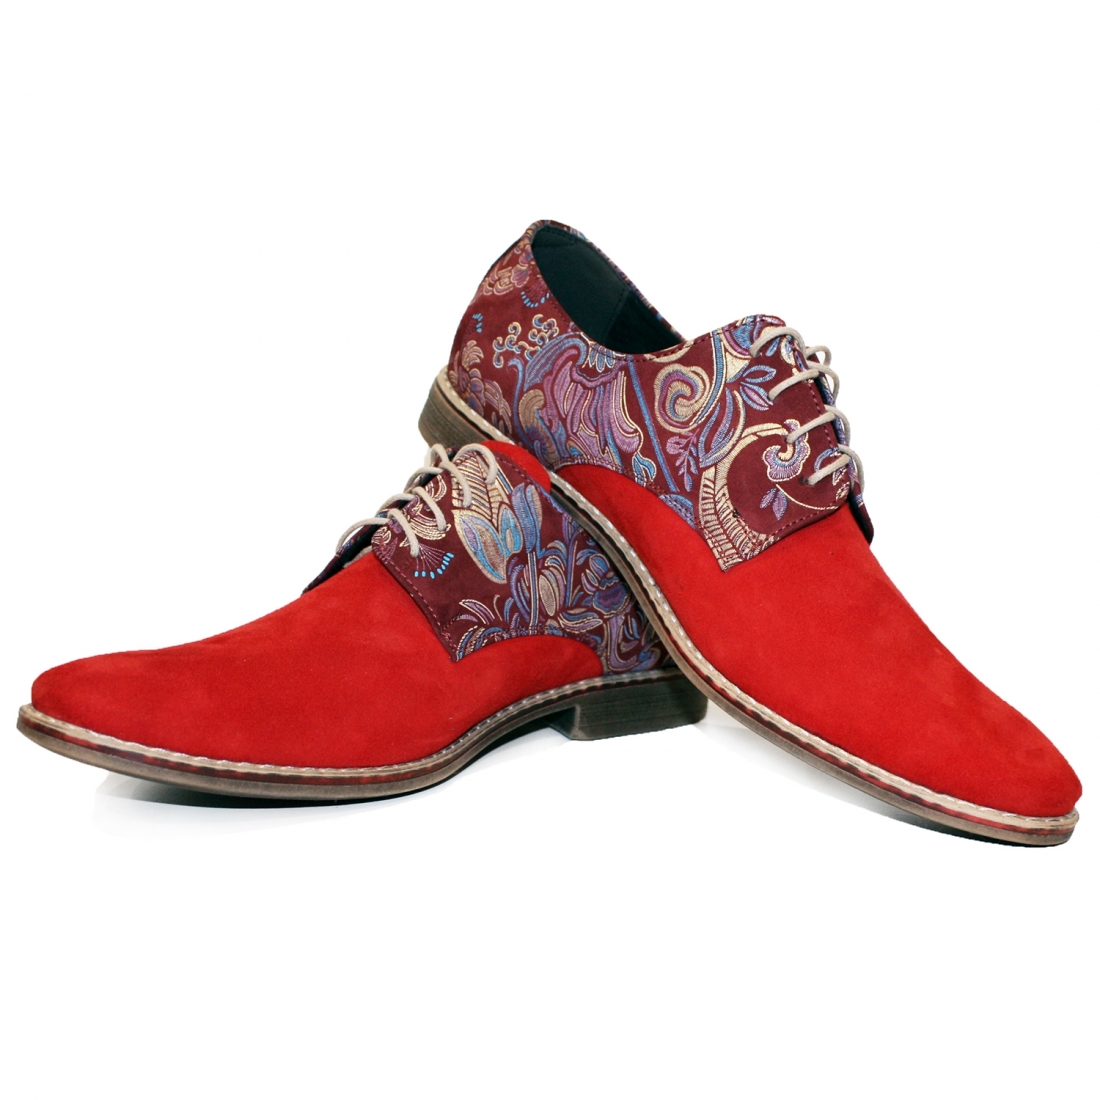 Modello Skreelo - Classic Shoes - Handmade Colorful Italian Leather Shoes